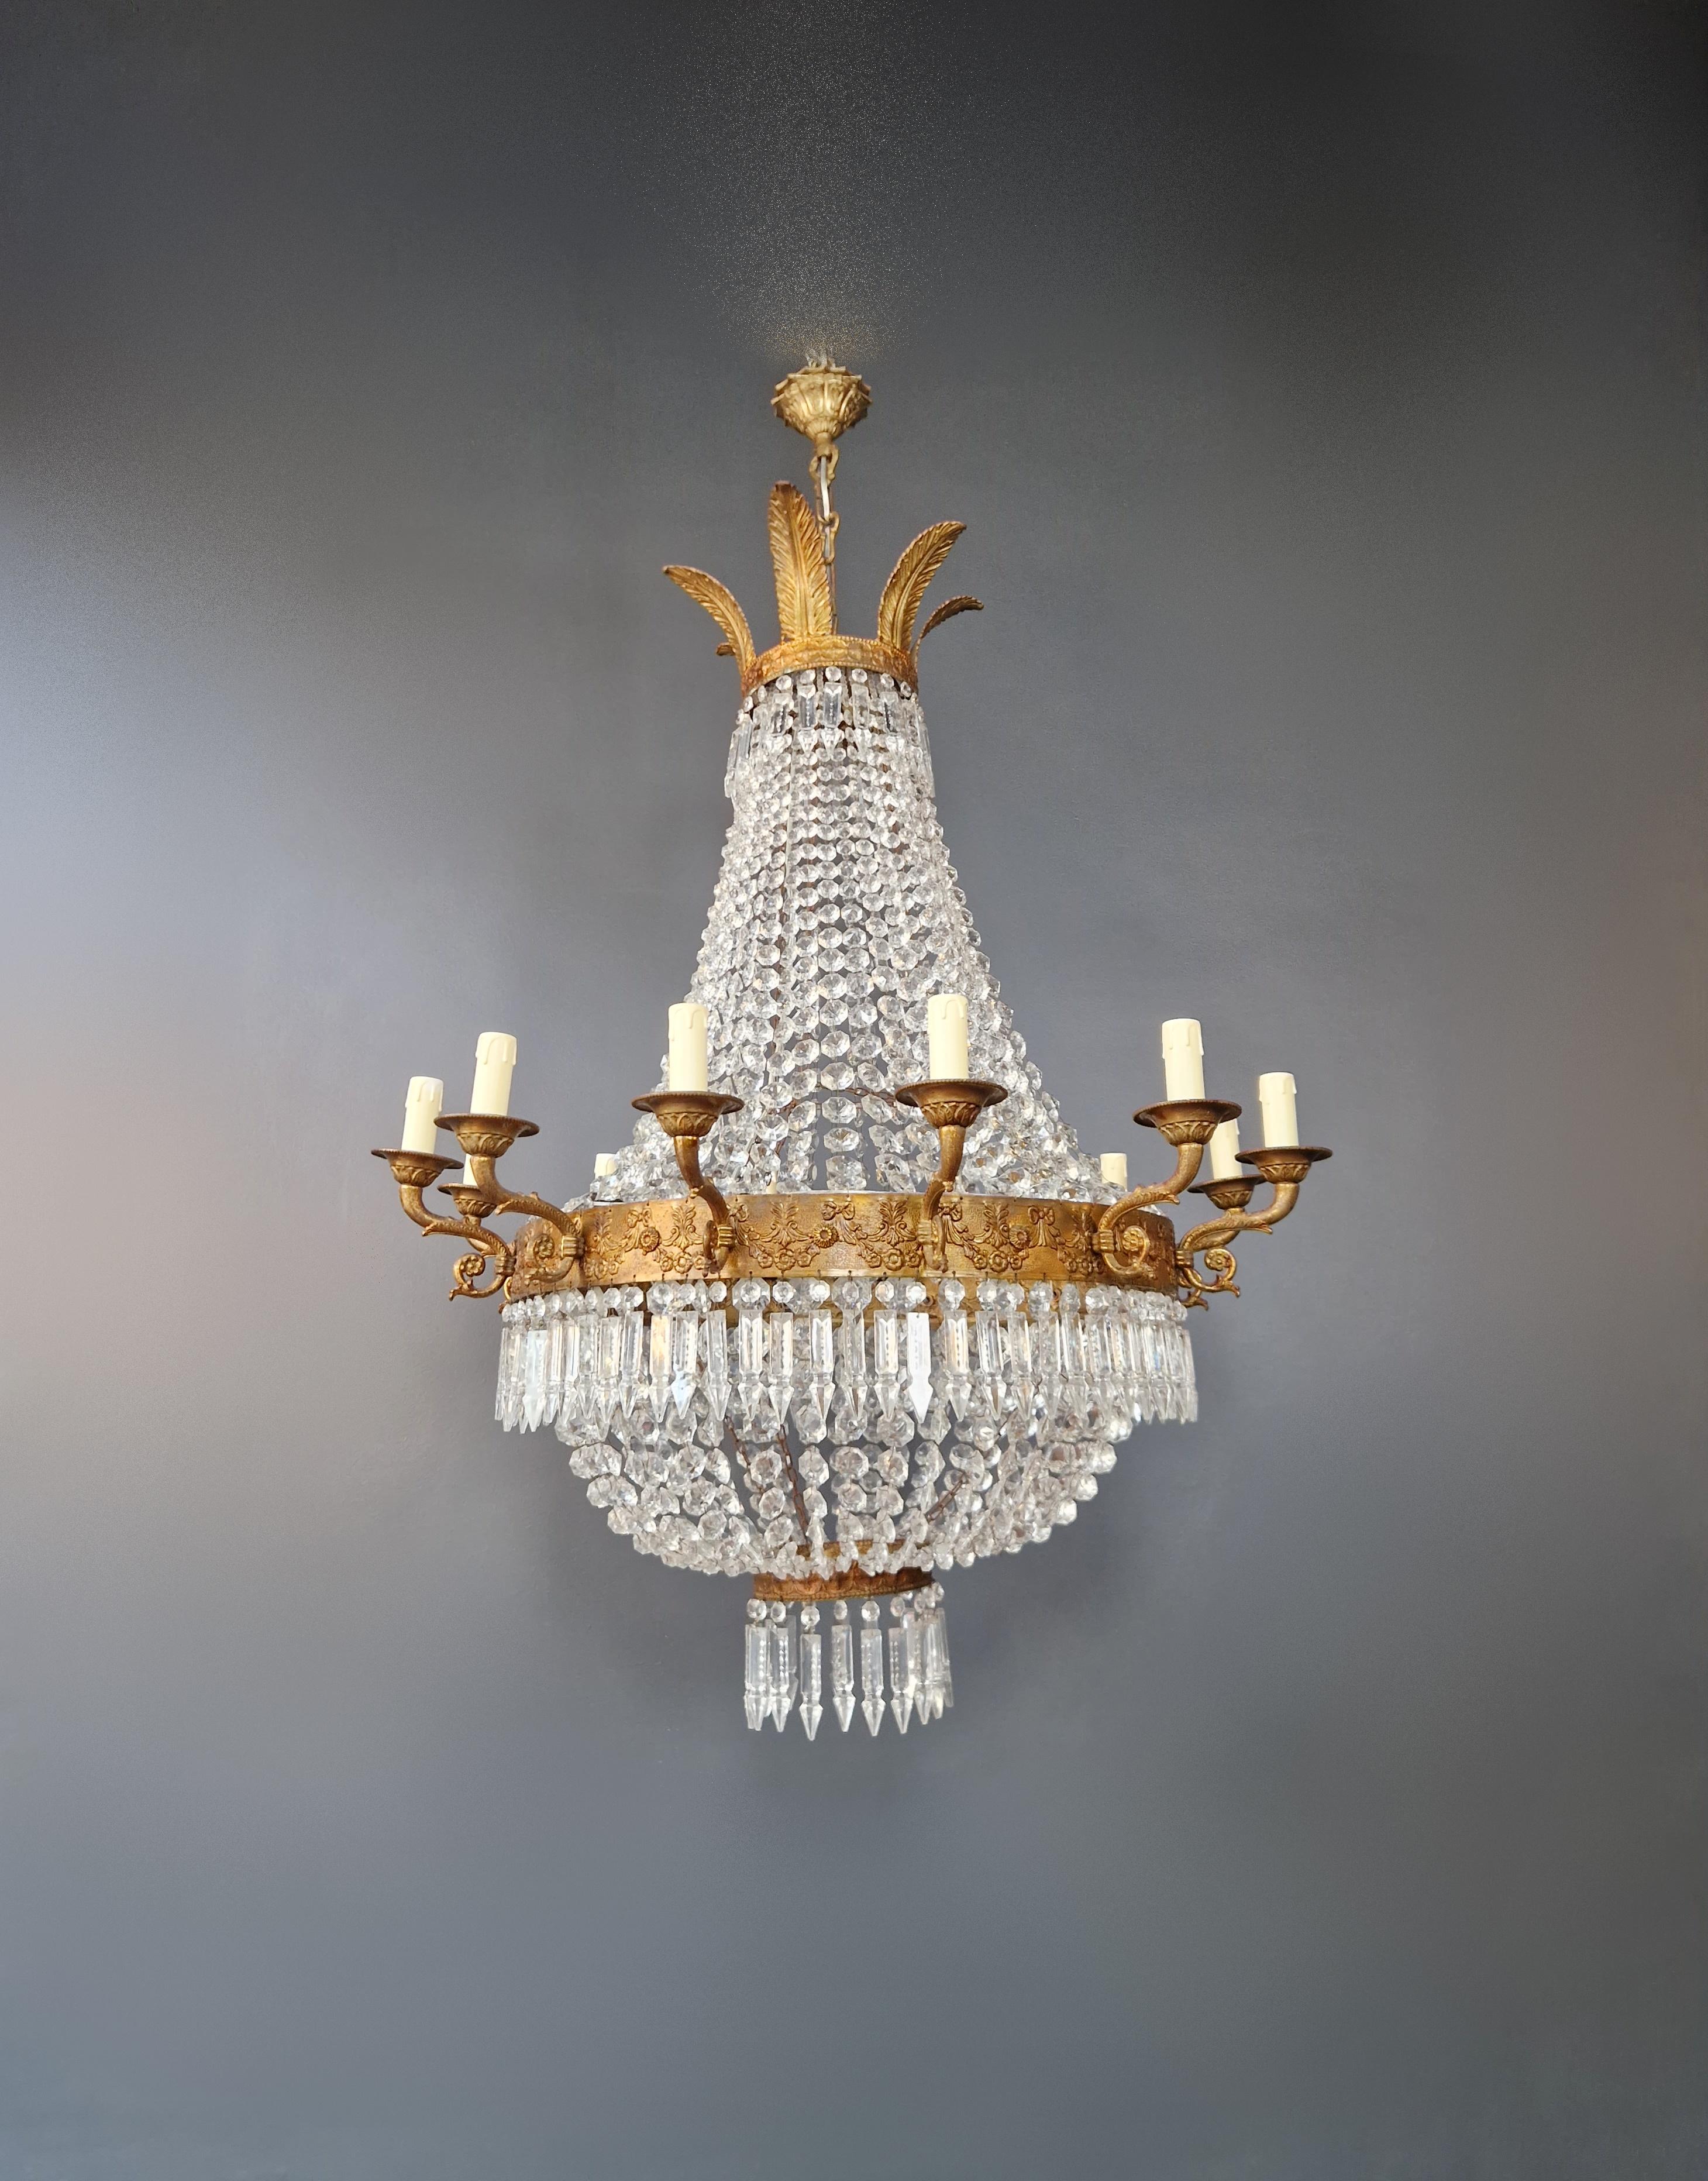 European Empire Brass Chandelier Crystal Lustre Ceiling Light Antique Classical